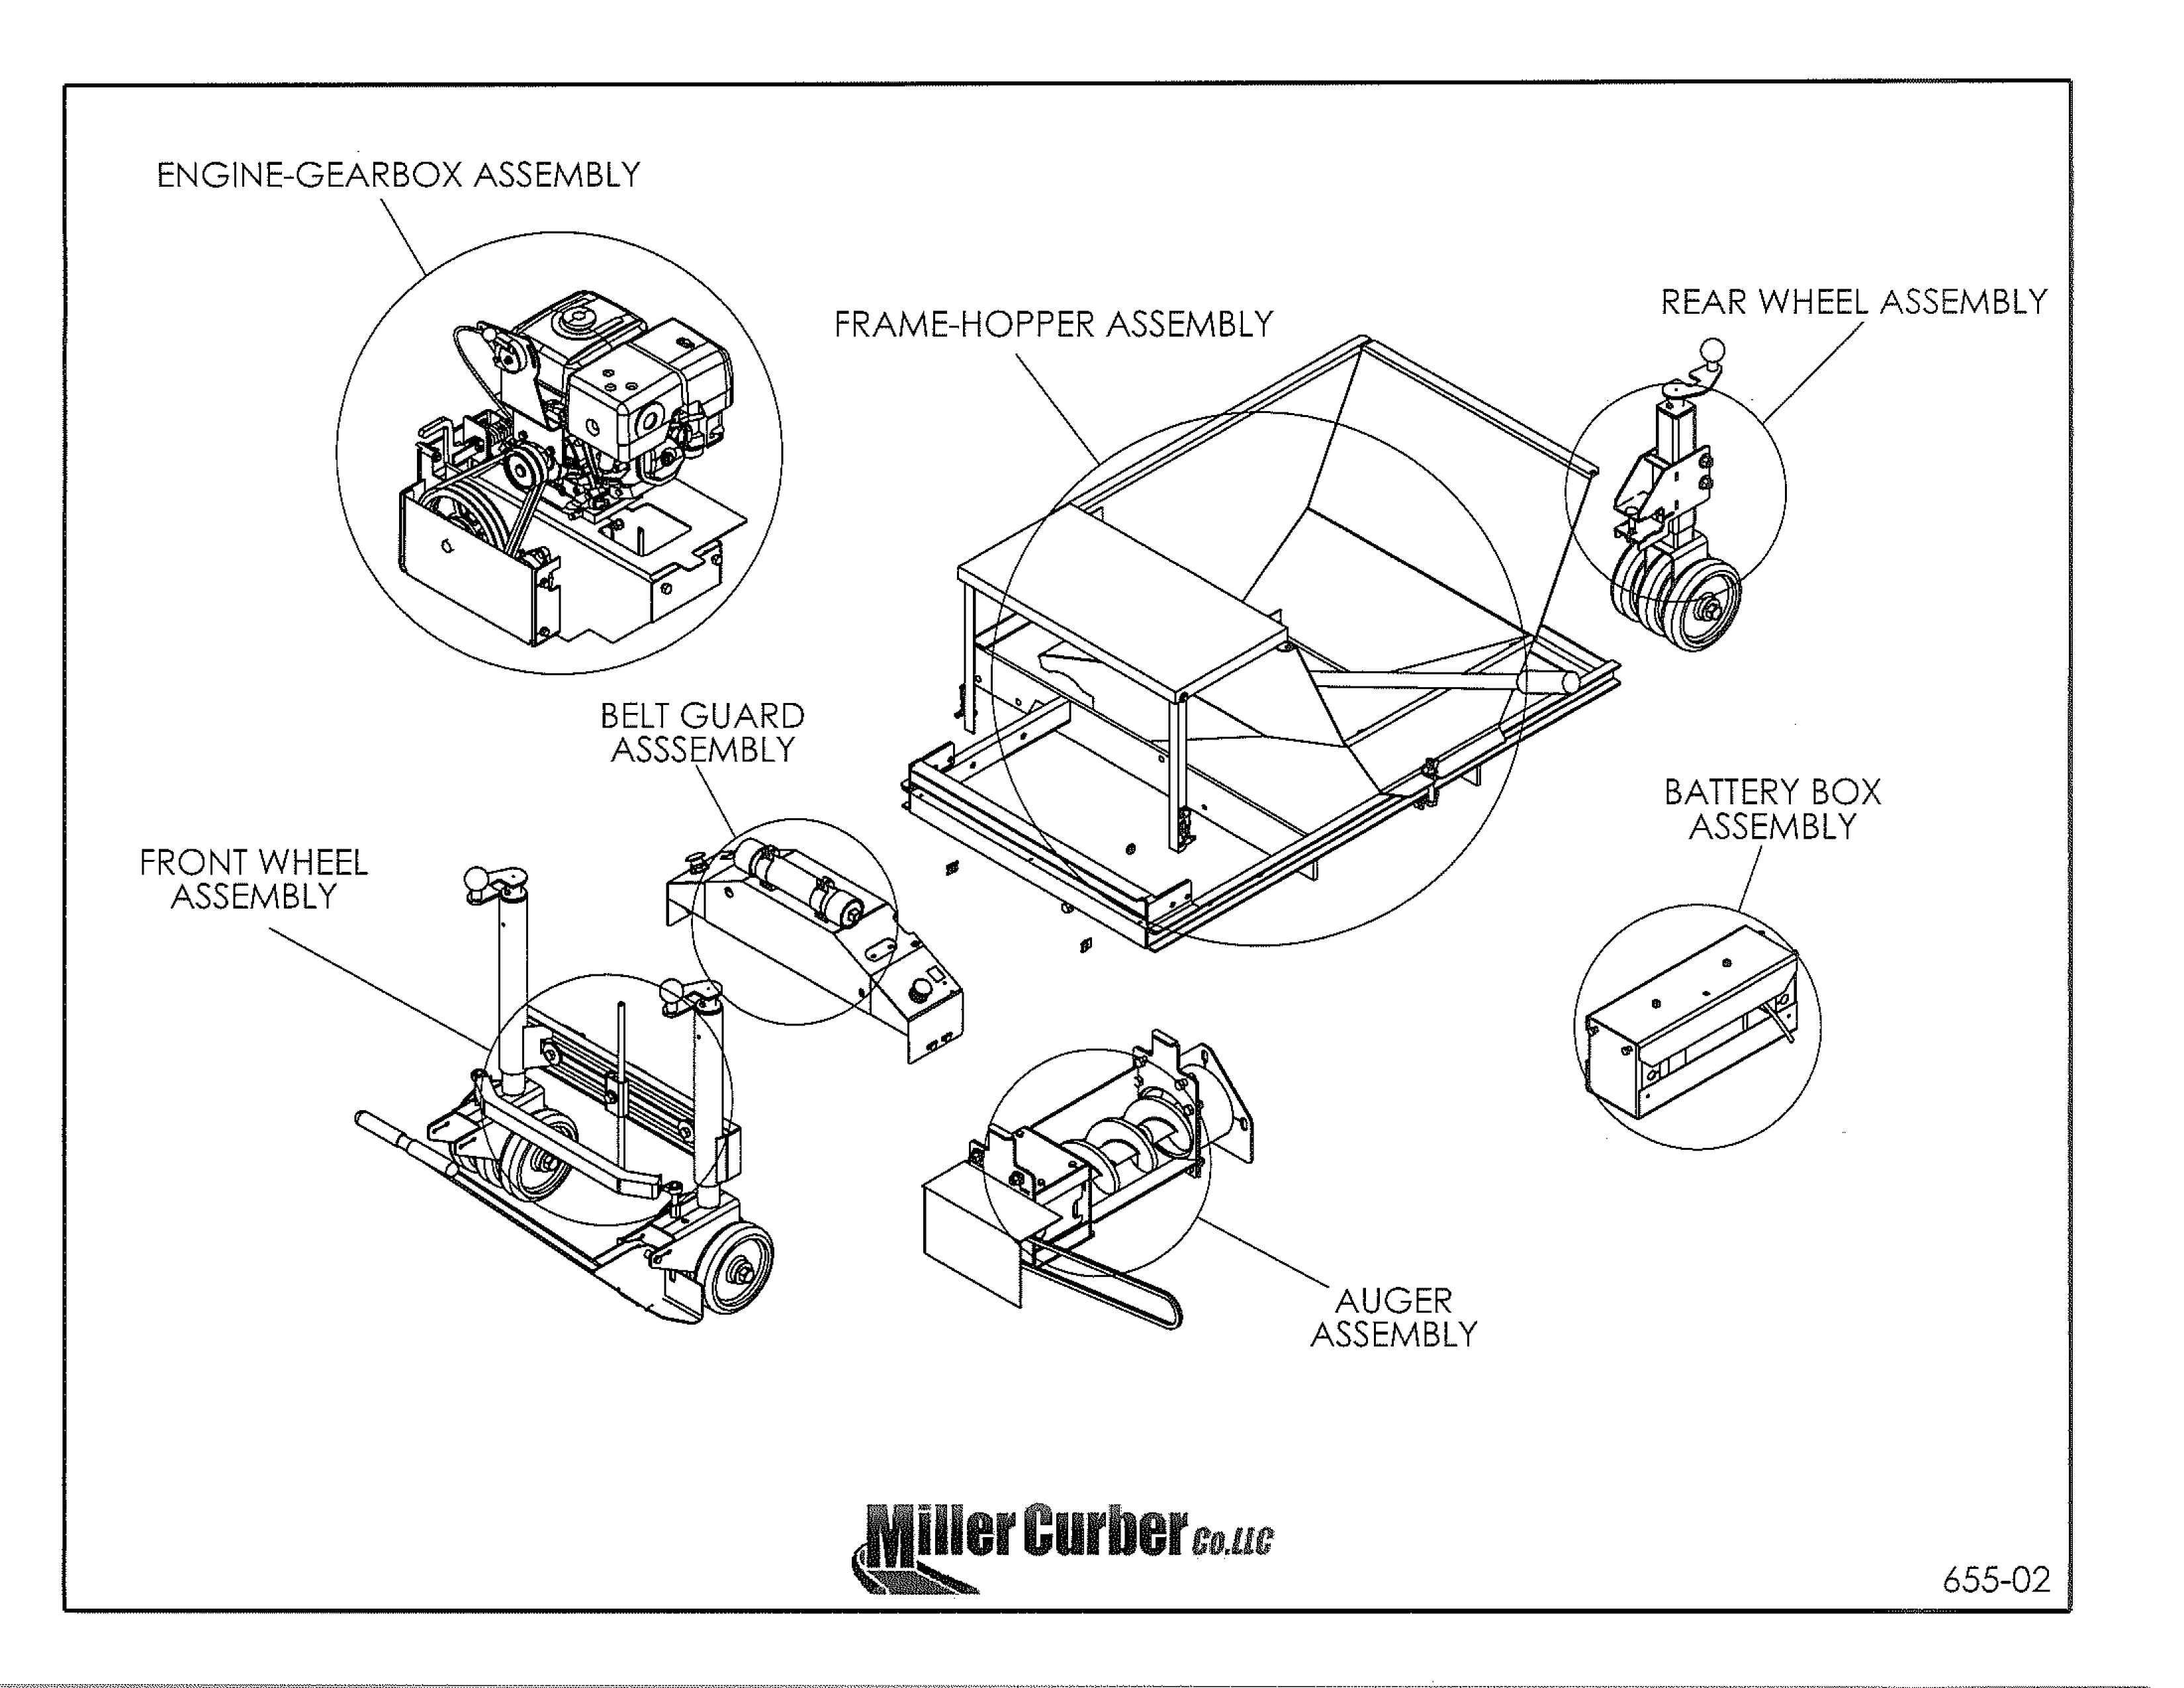 655 Parts - Miller Curber Company